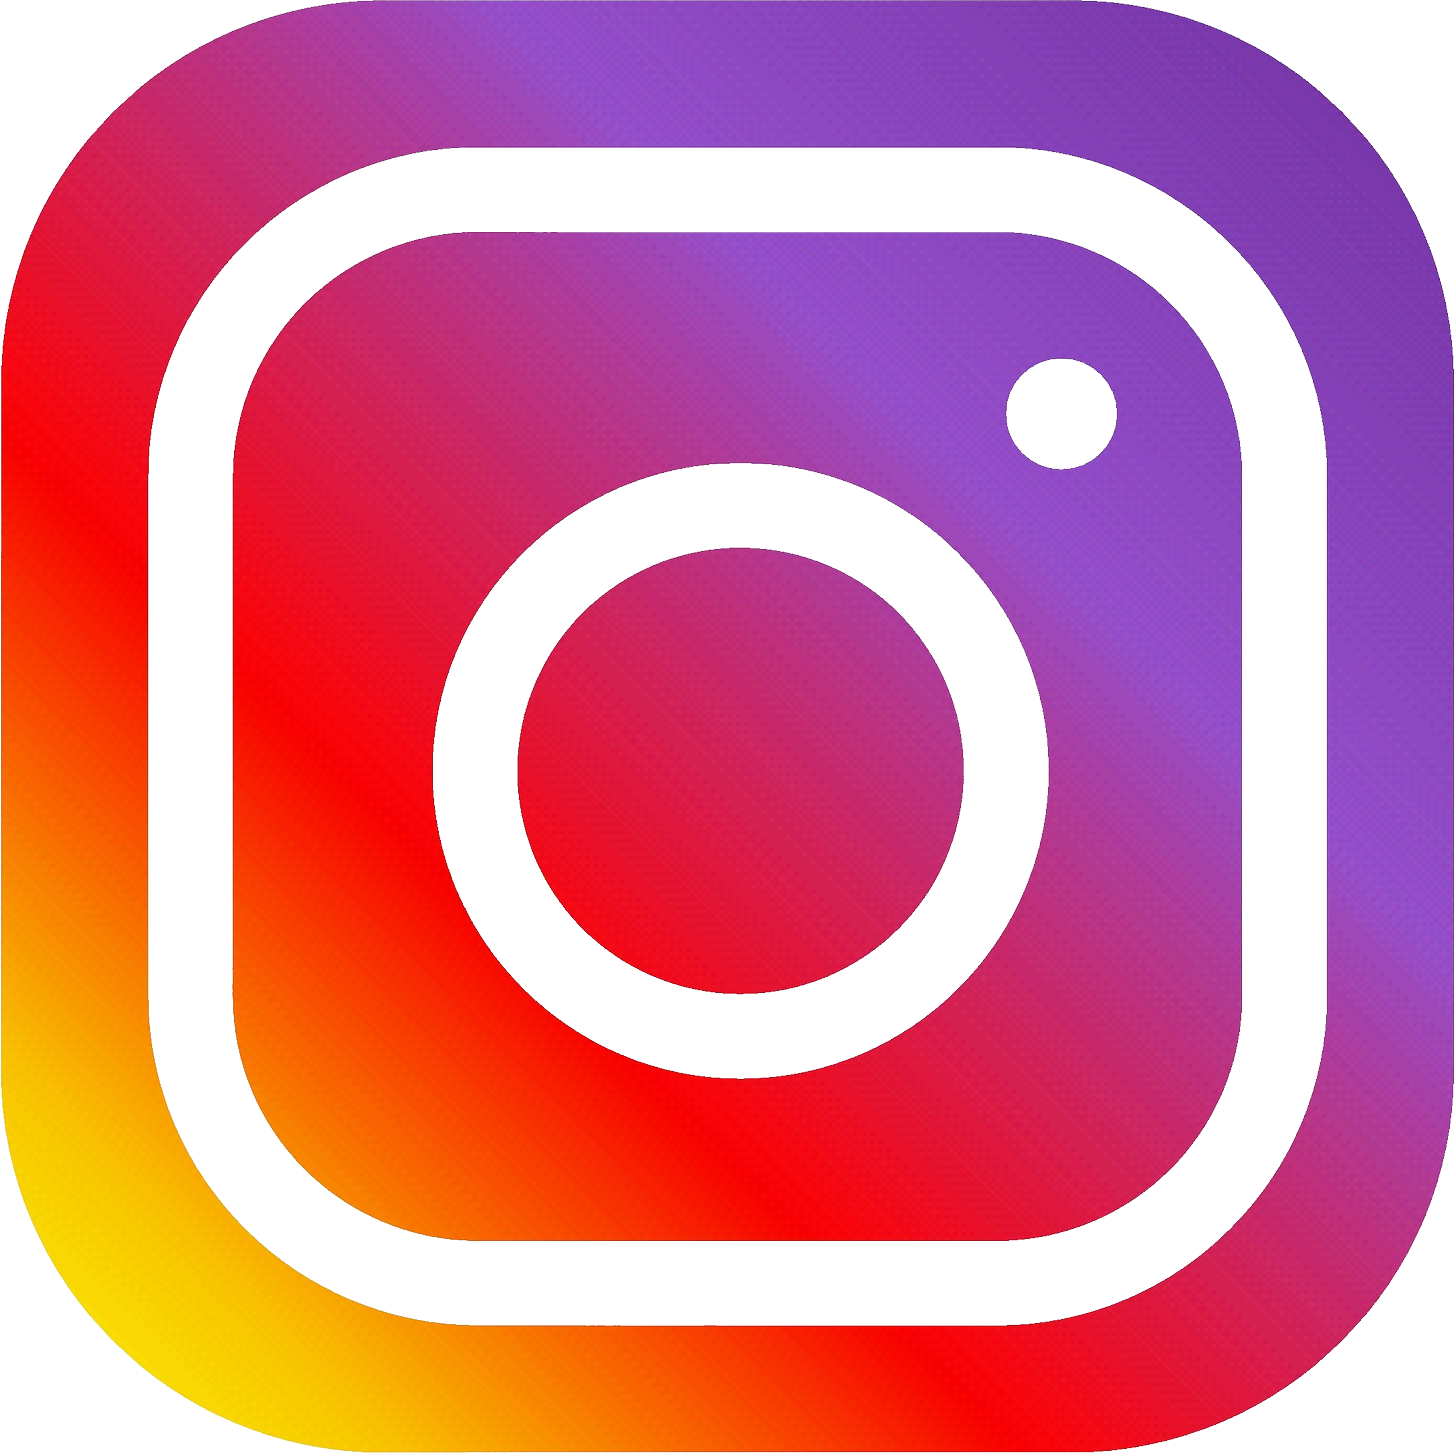 Risultati immagini per instagram logo